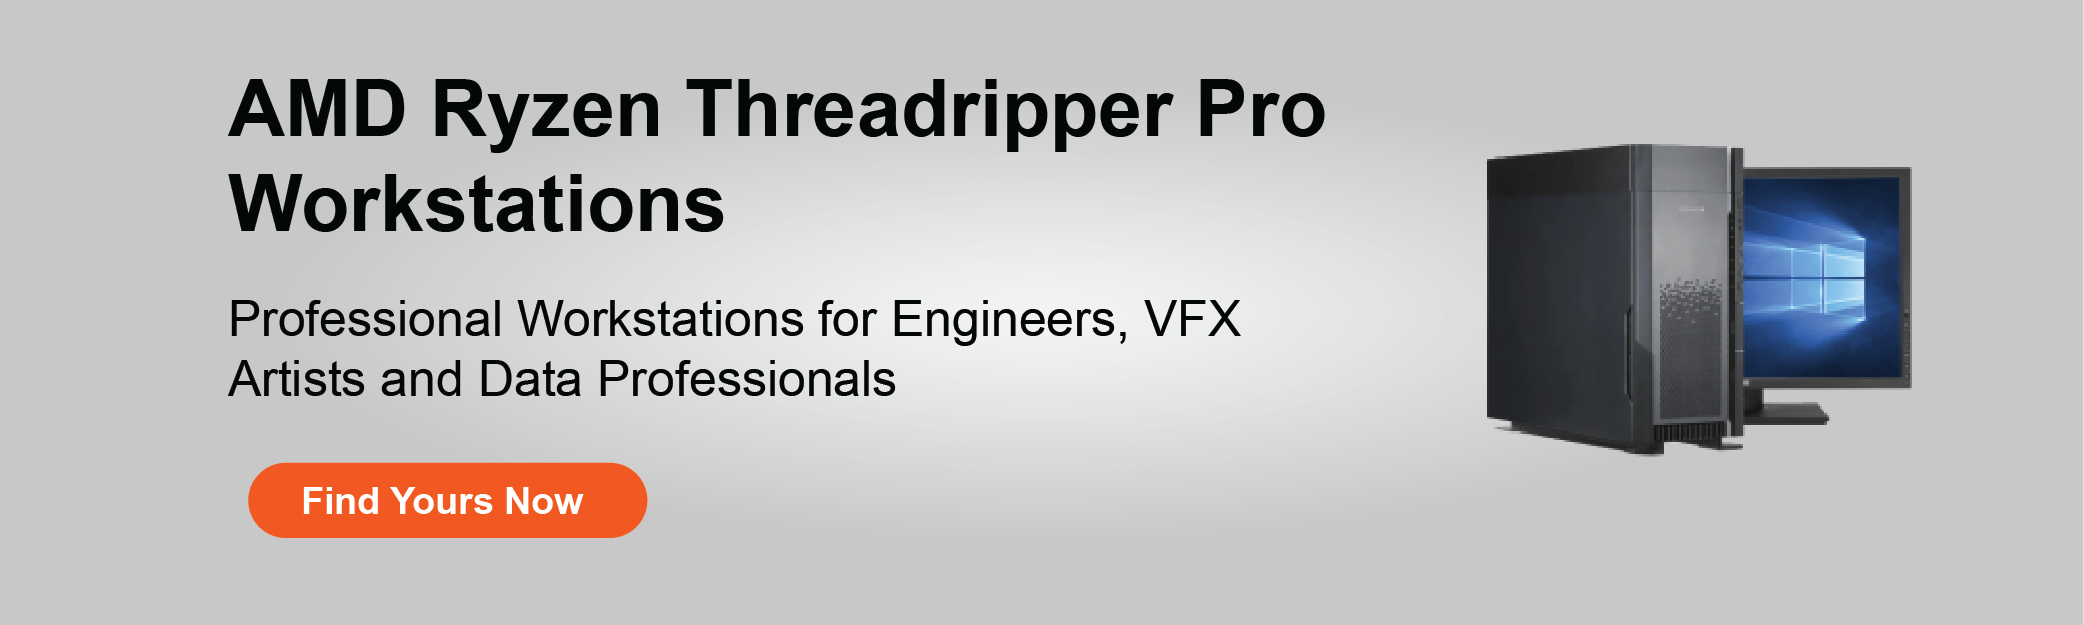 Threadripper Pro Systems